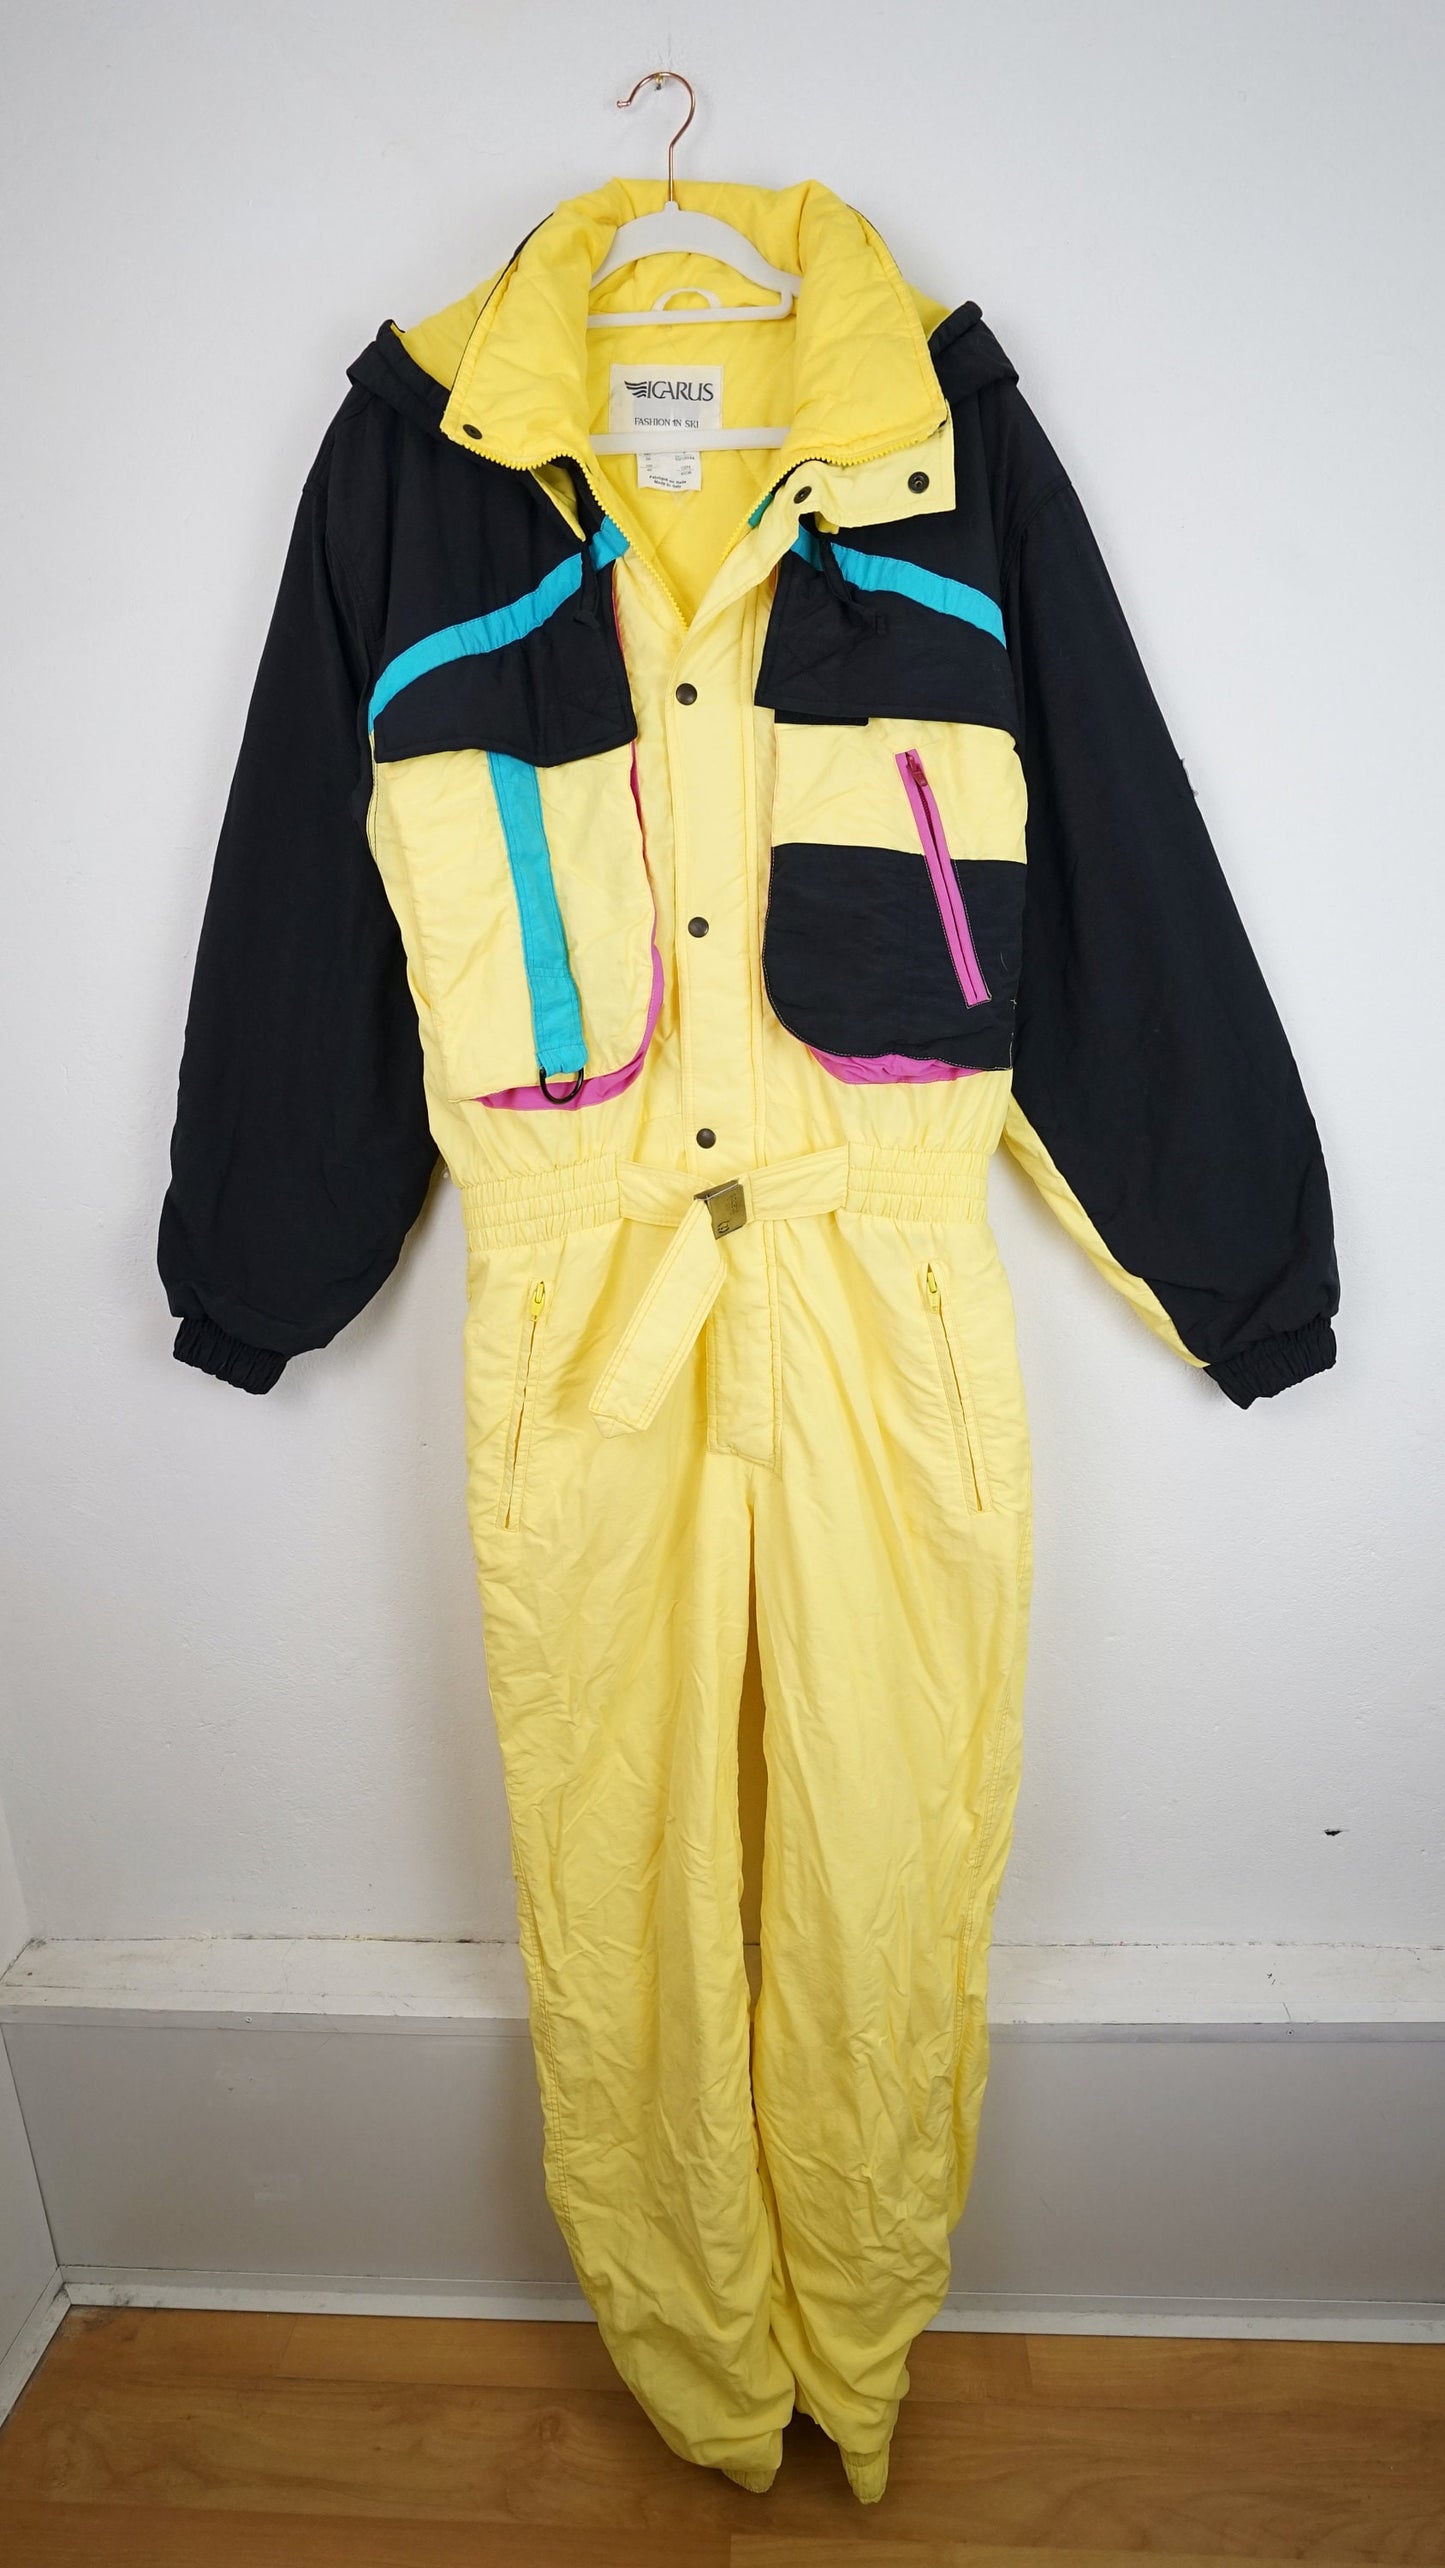 Vintage yellow black Ski Suit men size M